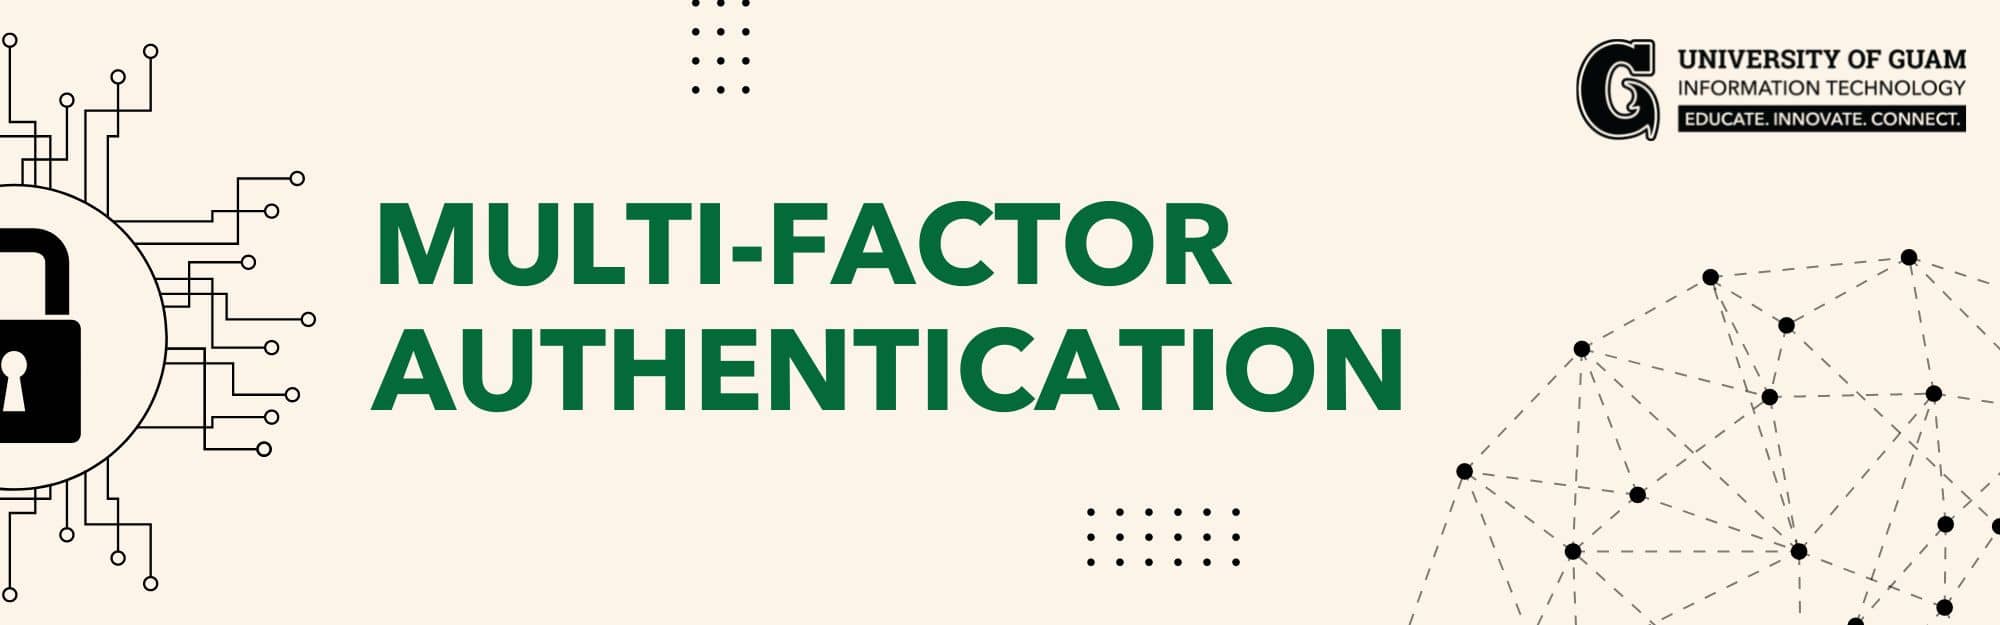 Multi-factor Authentication banner